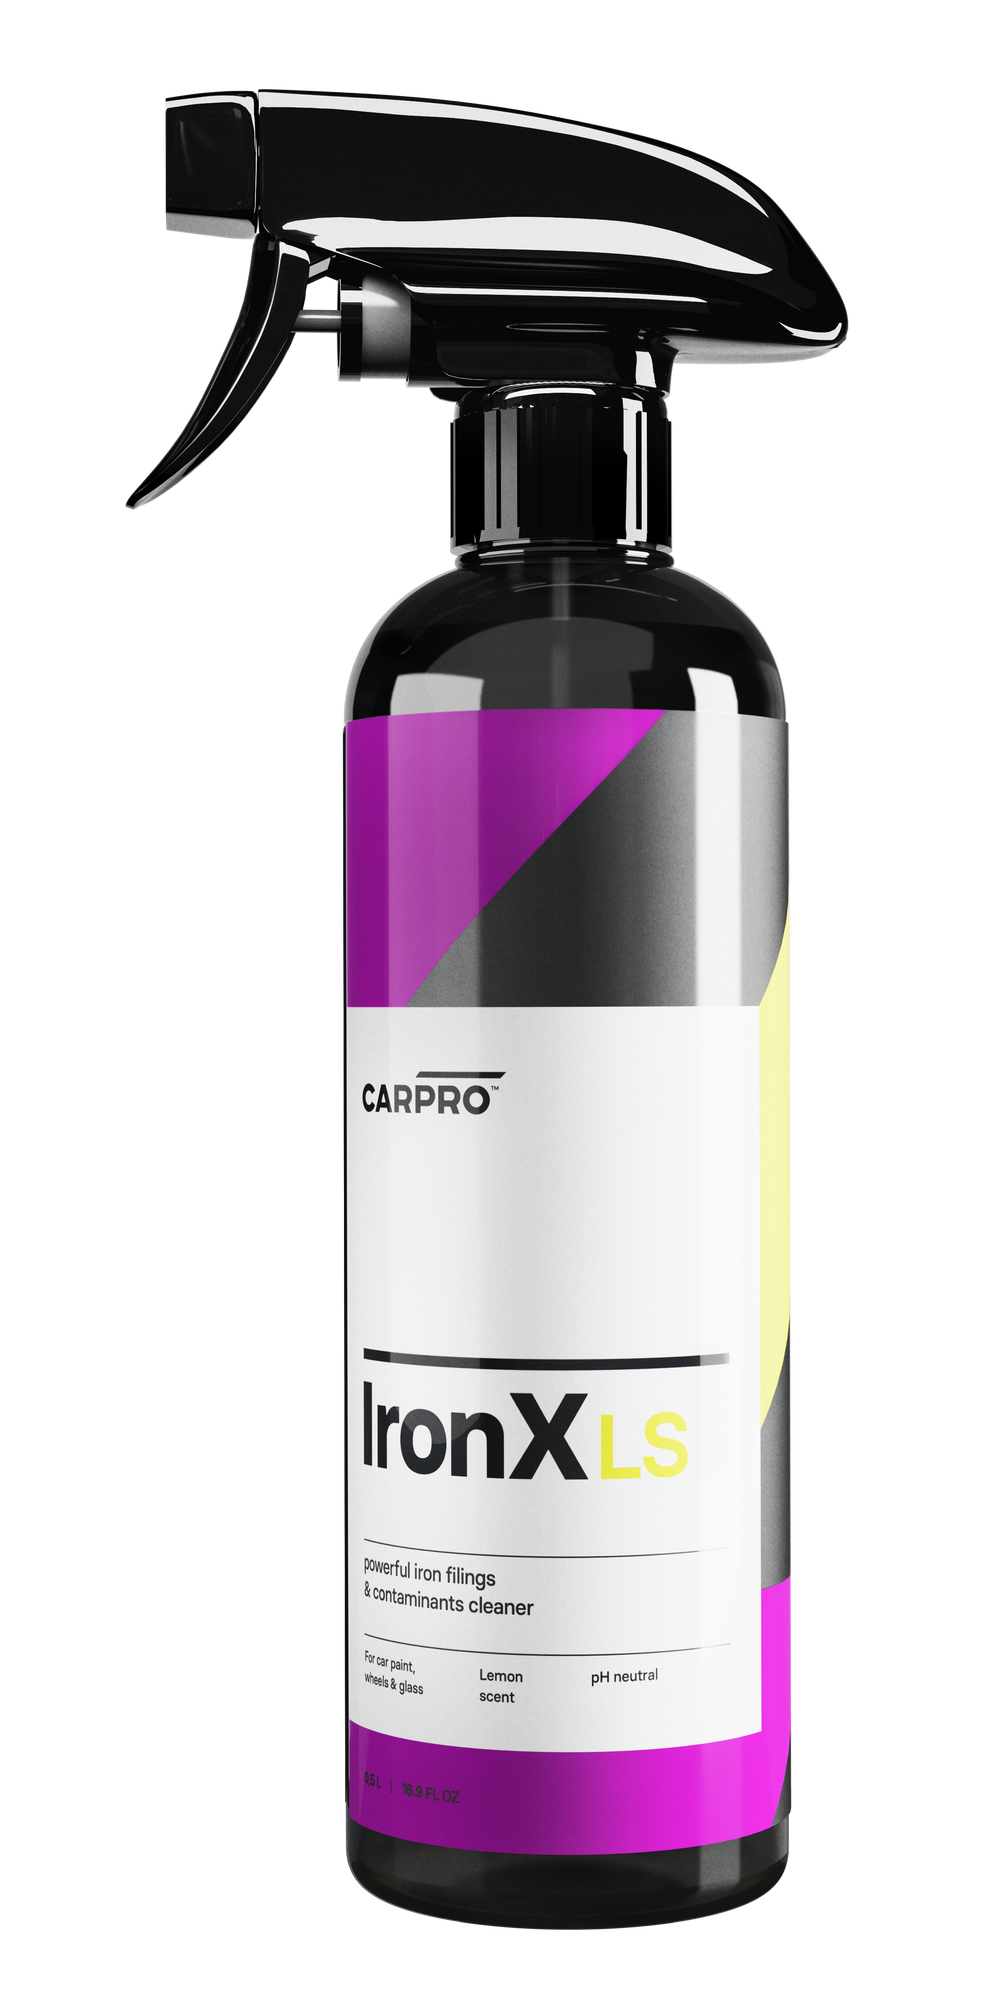 CARPRO IronX LS 500ml - Iron filings and contaminants cleaner